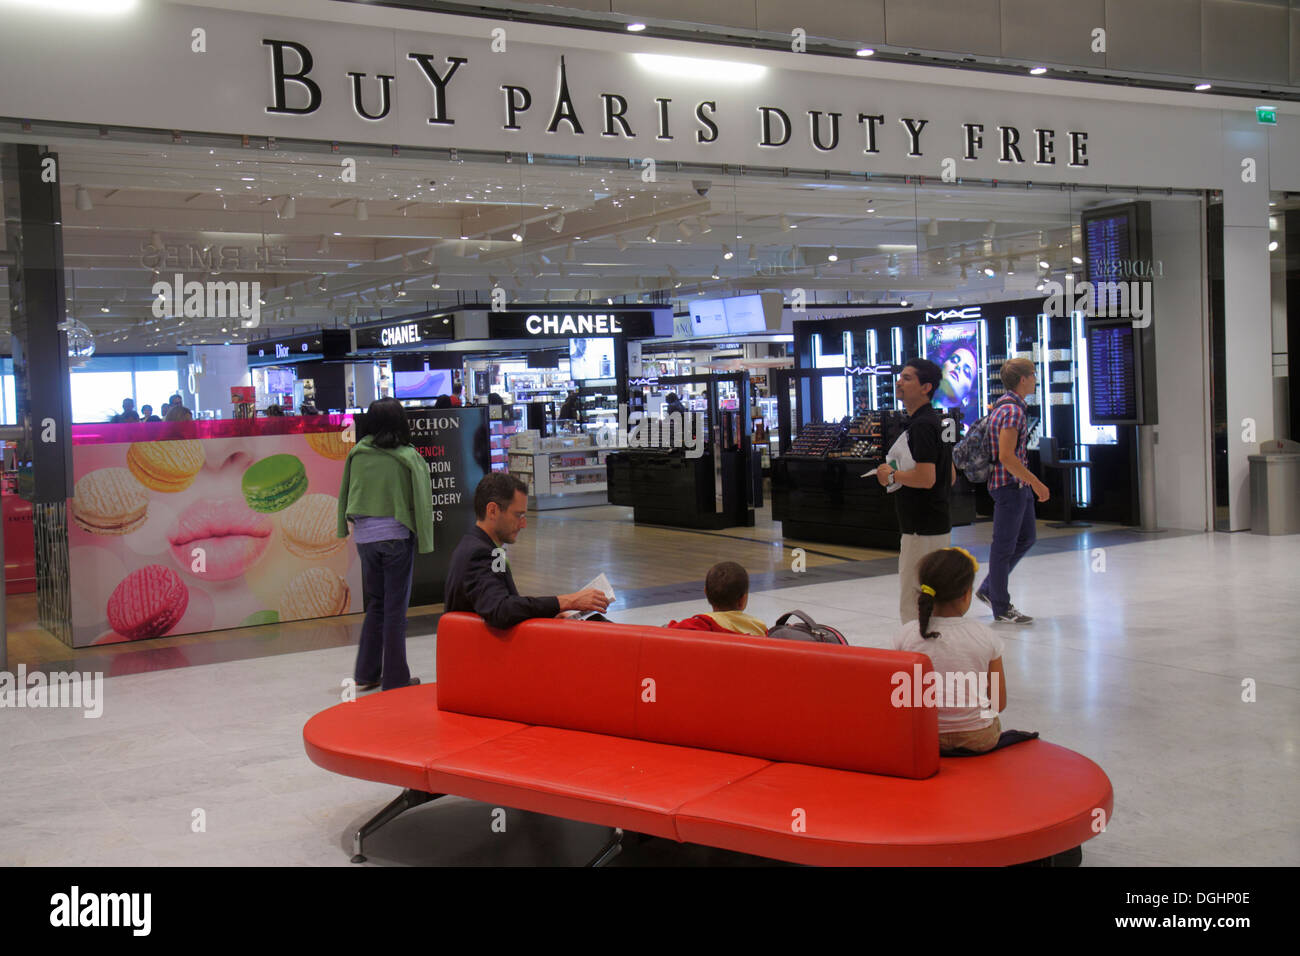 Paris airport duty free shop Stock Photo - Alamy